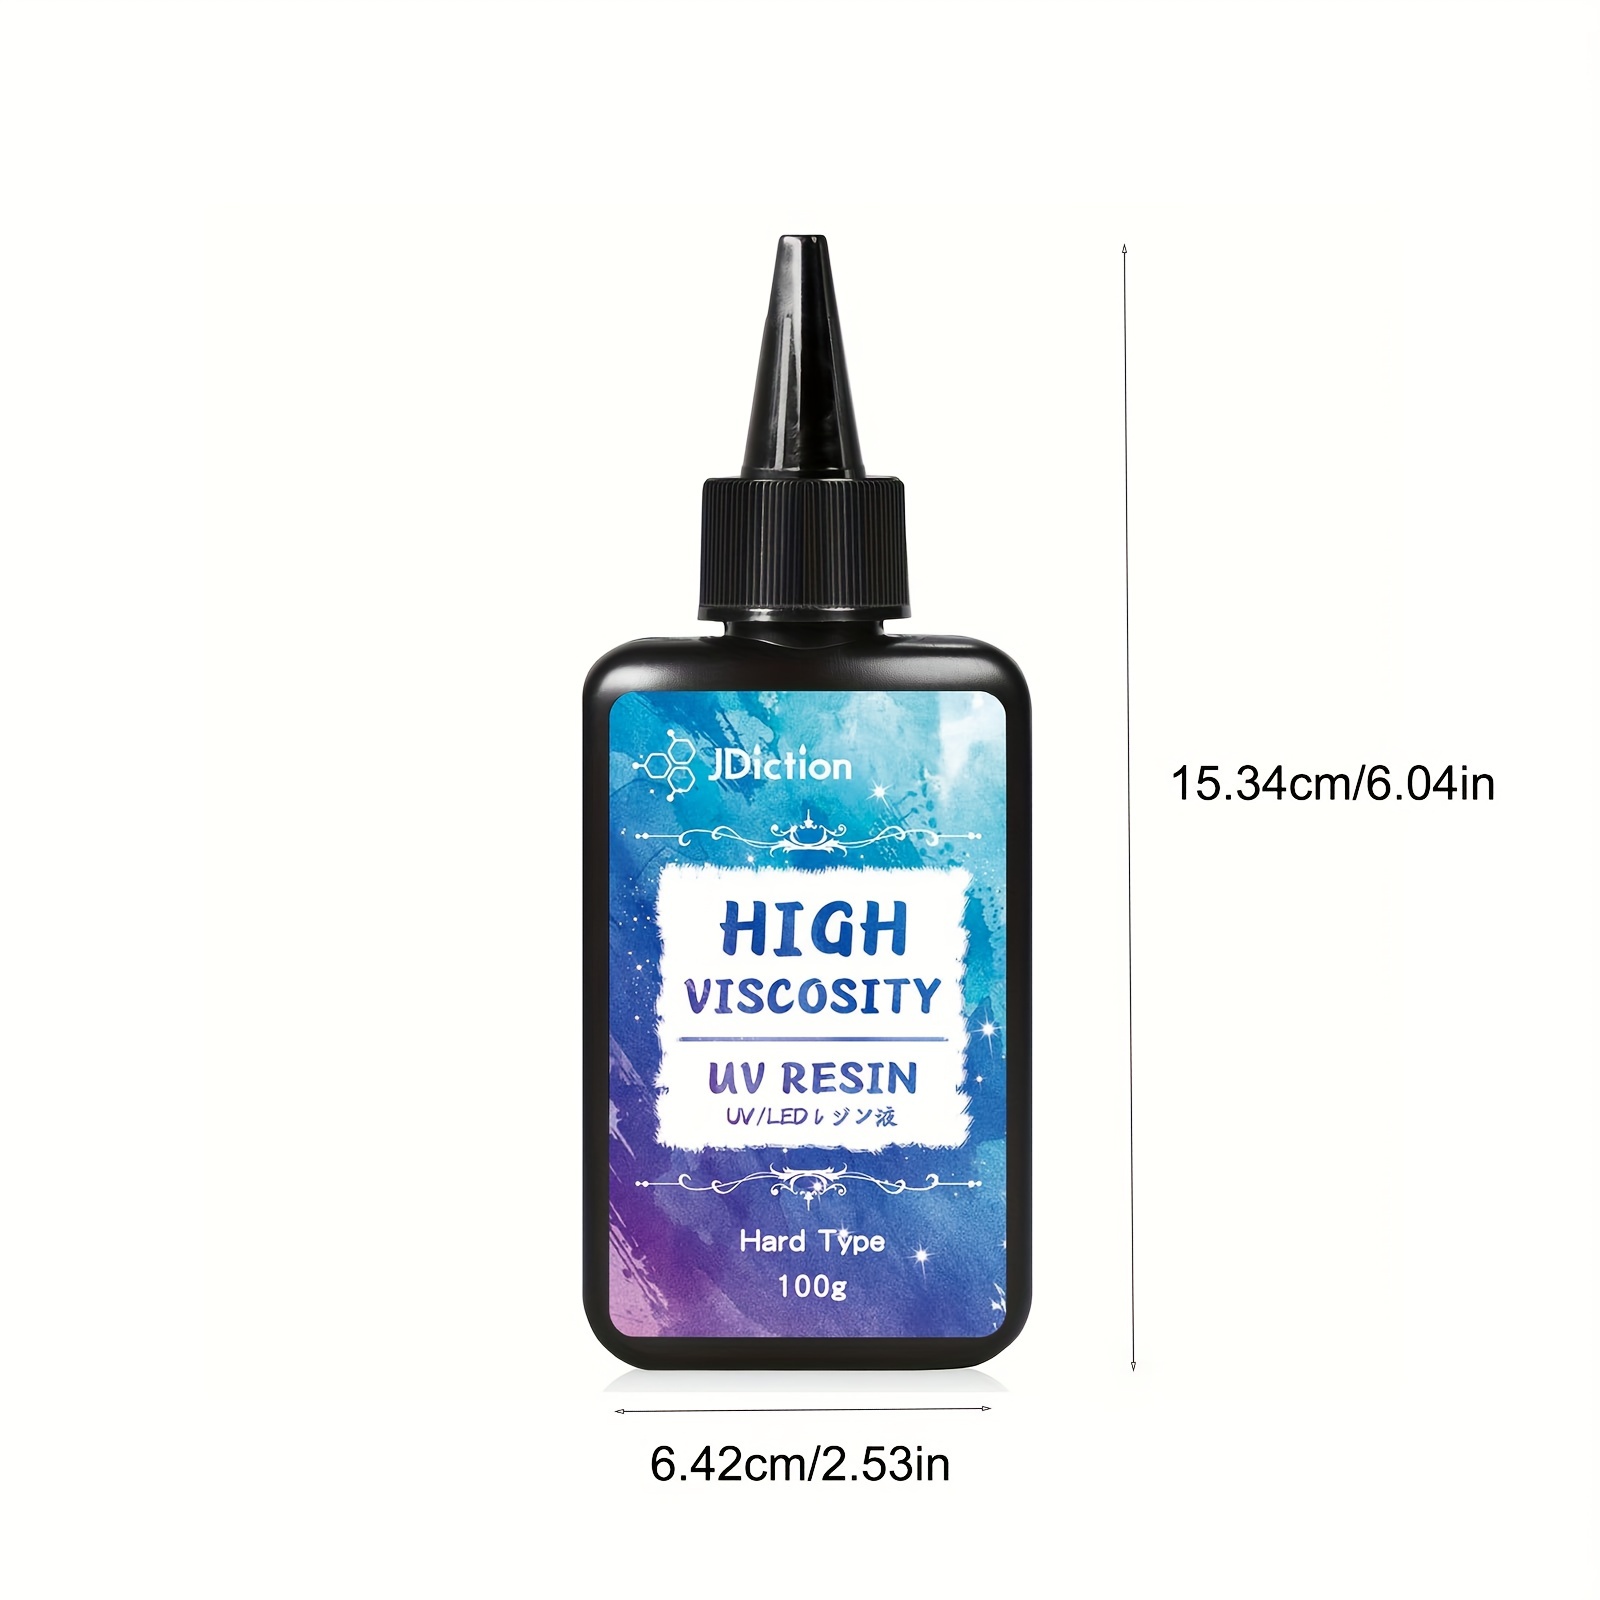  JDiction UV Resin, High Gloss 300g UV Resin Clear